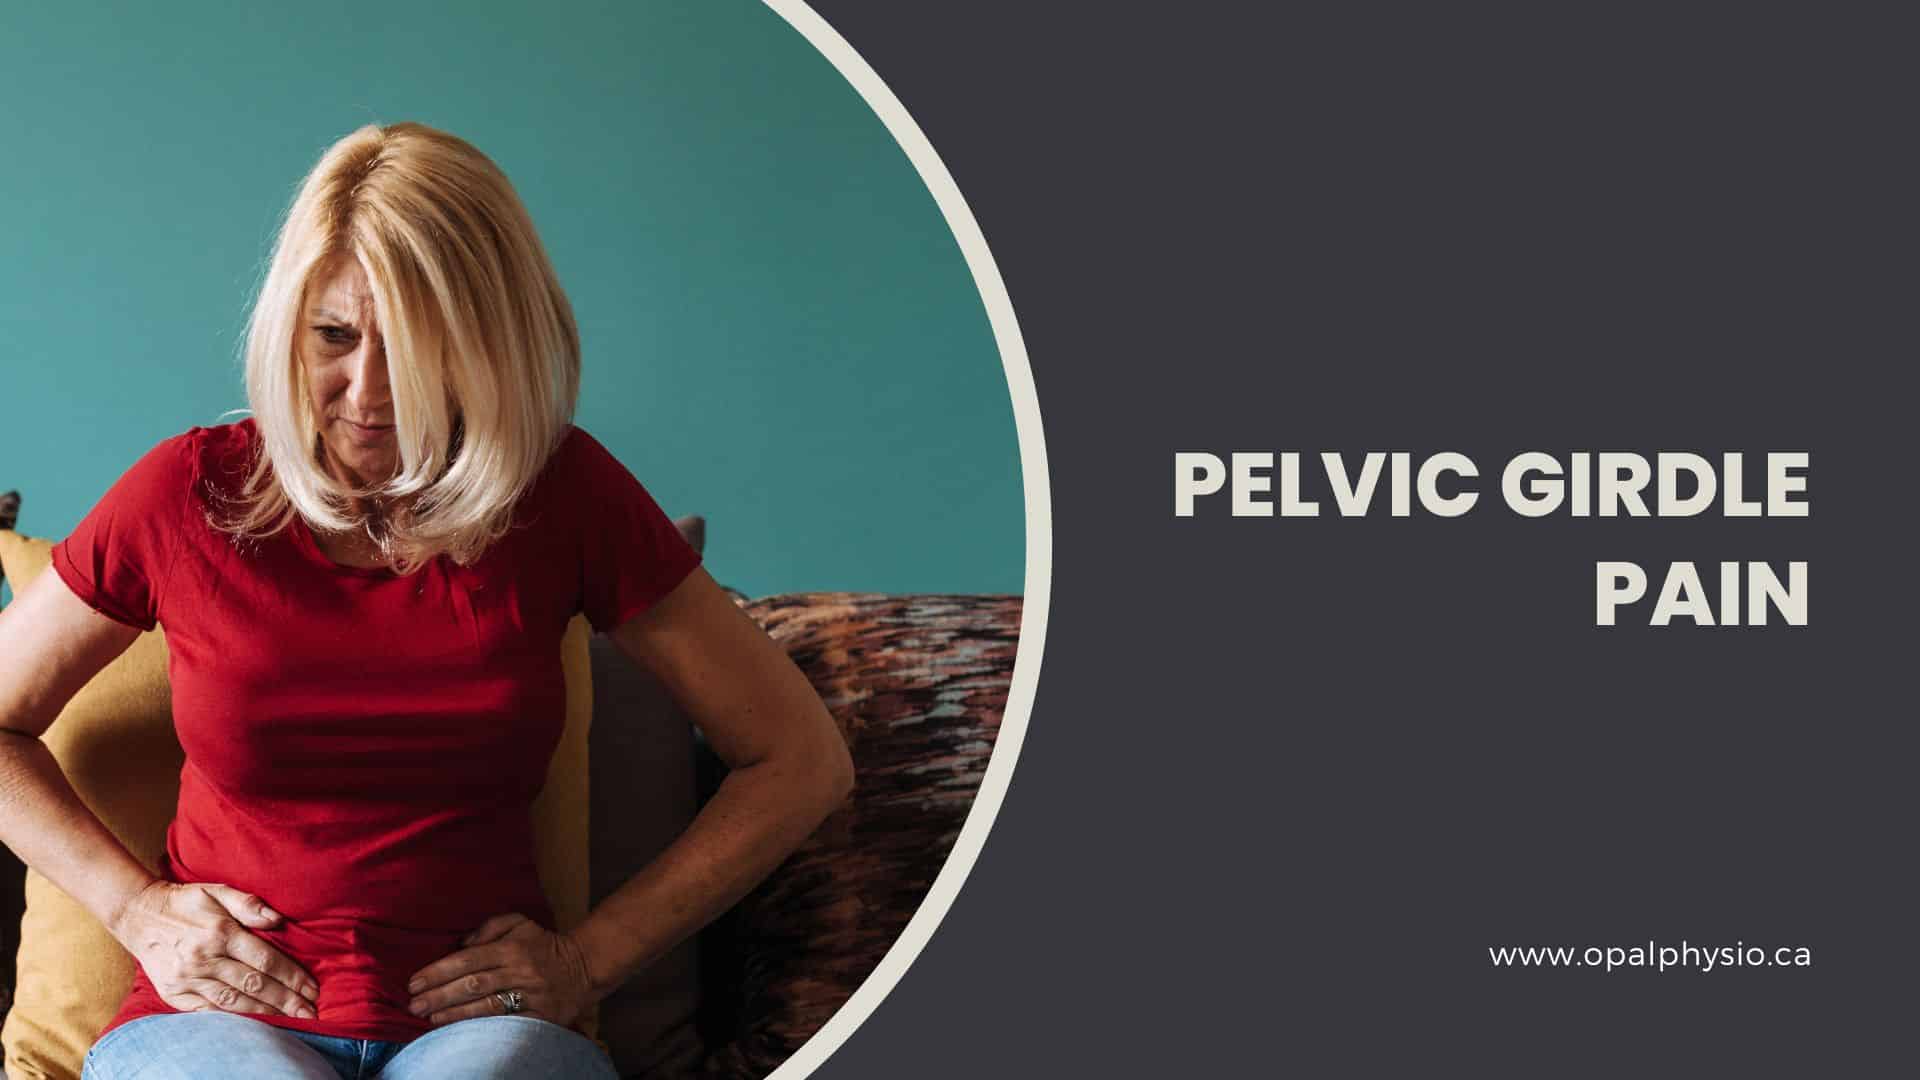 Pelvic Girdle Pain  Optimum Health Solutions